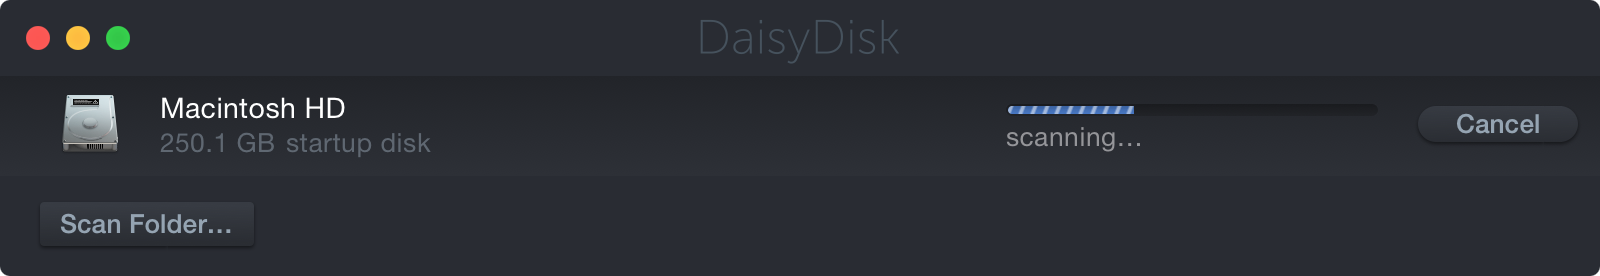 DaisyDisk 5